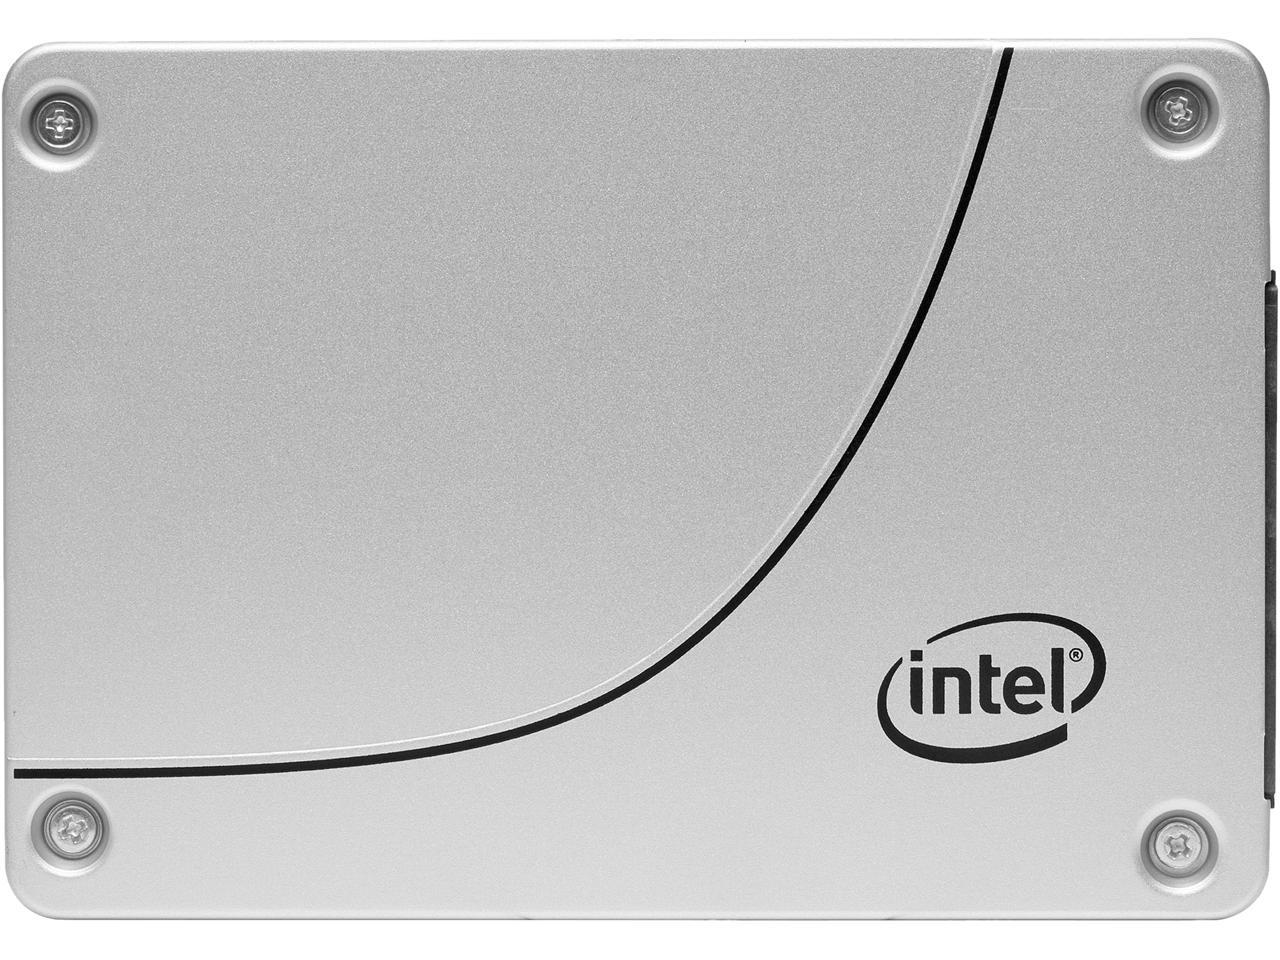 Intel SSD DC S3520 Series (150GB, 2.5in SATA 6Gb/s, 3D1, MLC) 7mm Generic Single Pack